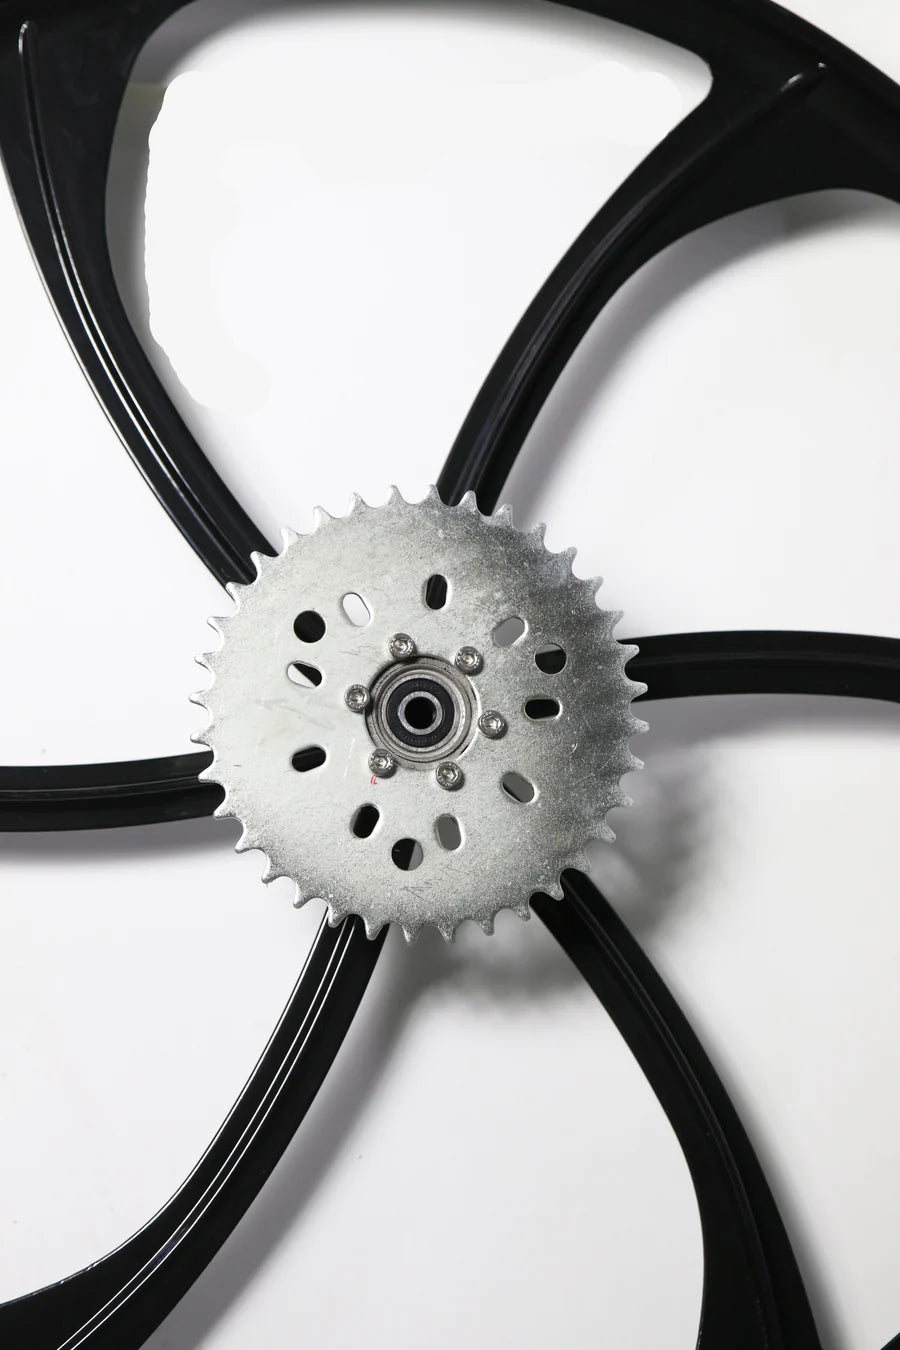 Motorized Bicycle Mag Wheel Wheels with sprocket Black